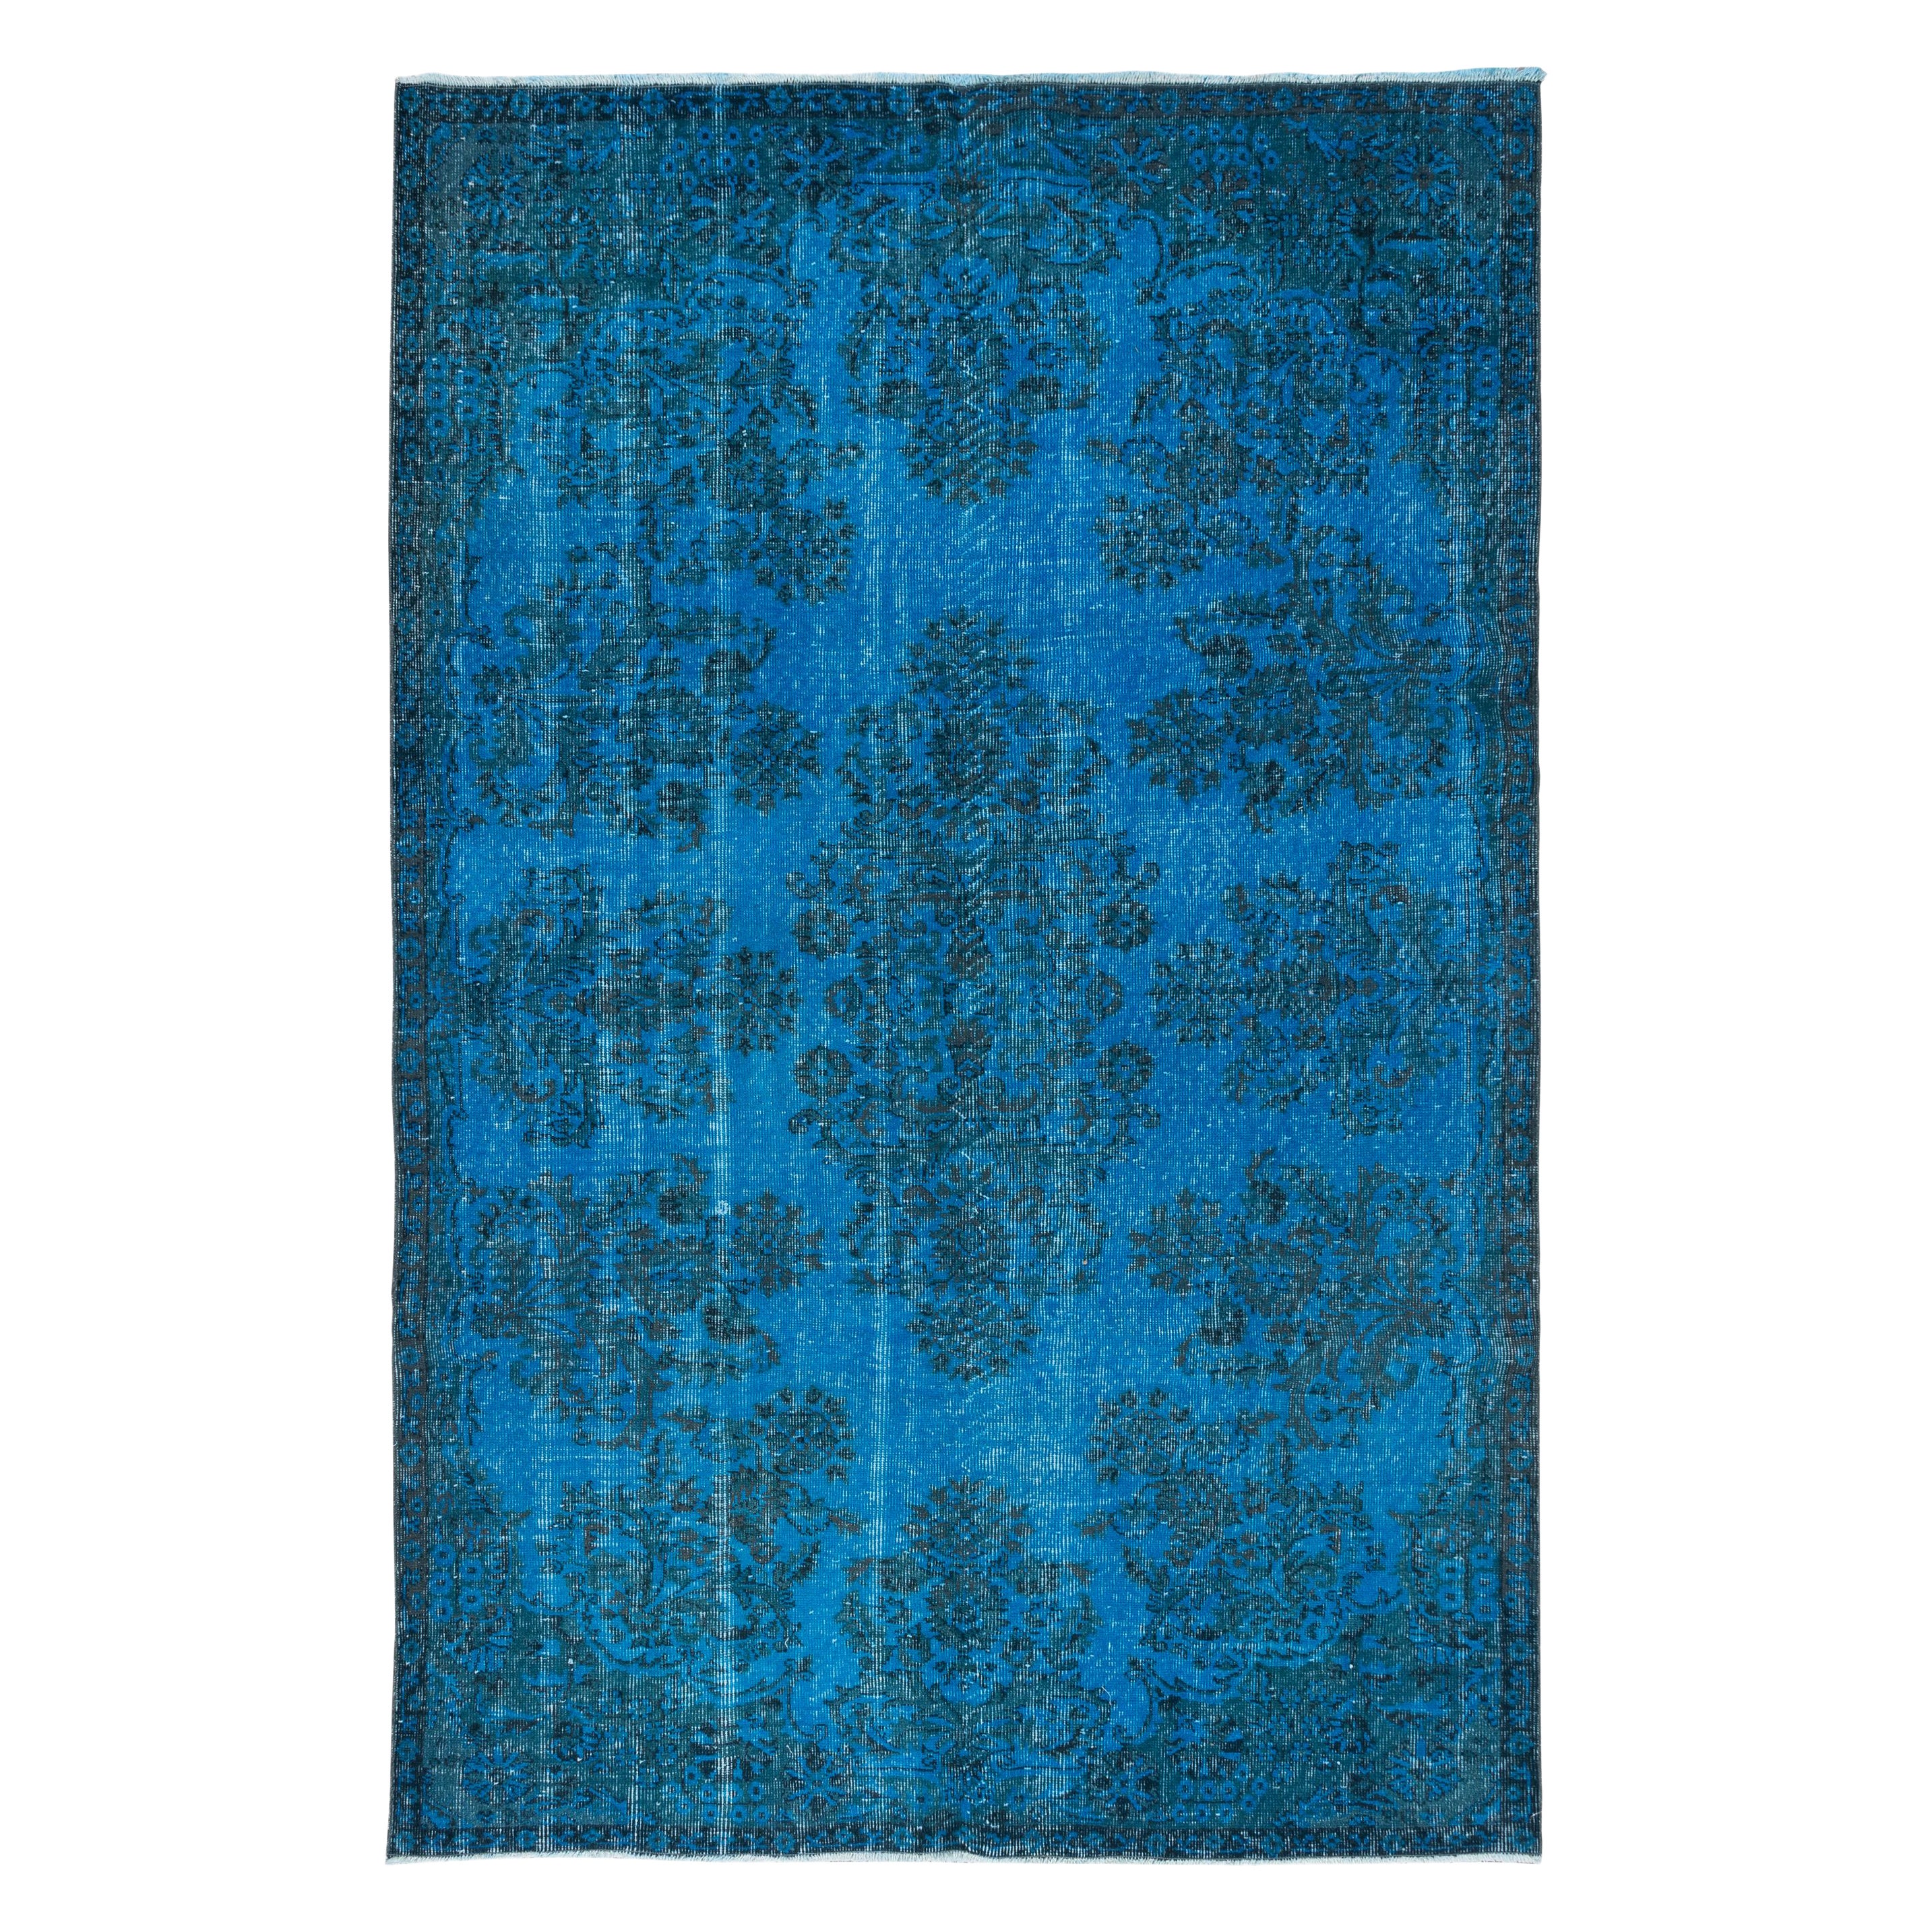 5.6x8.6 Ft Blue Modern Area Rug from Turkey, Handmade Carpet for Living Room For Sale